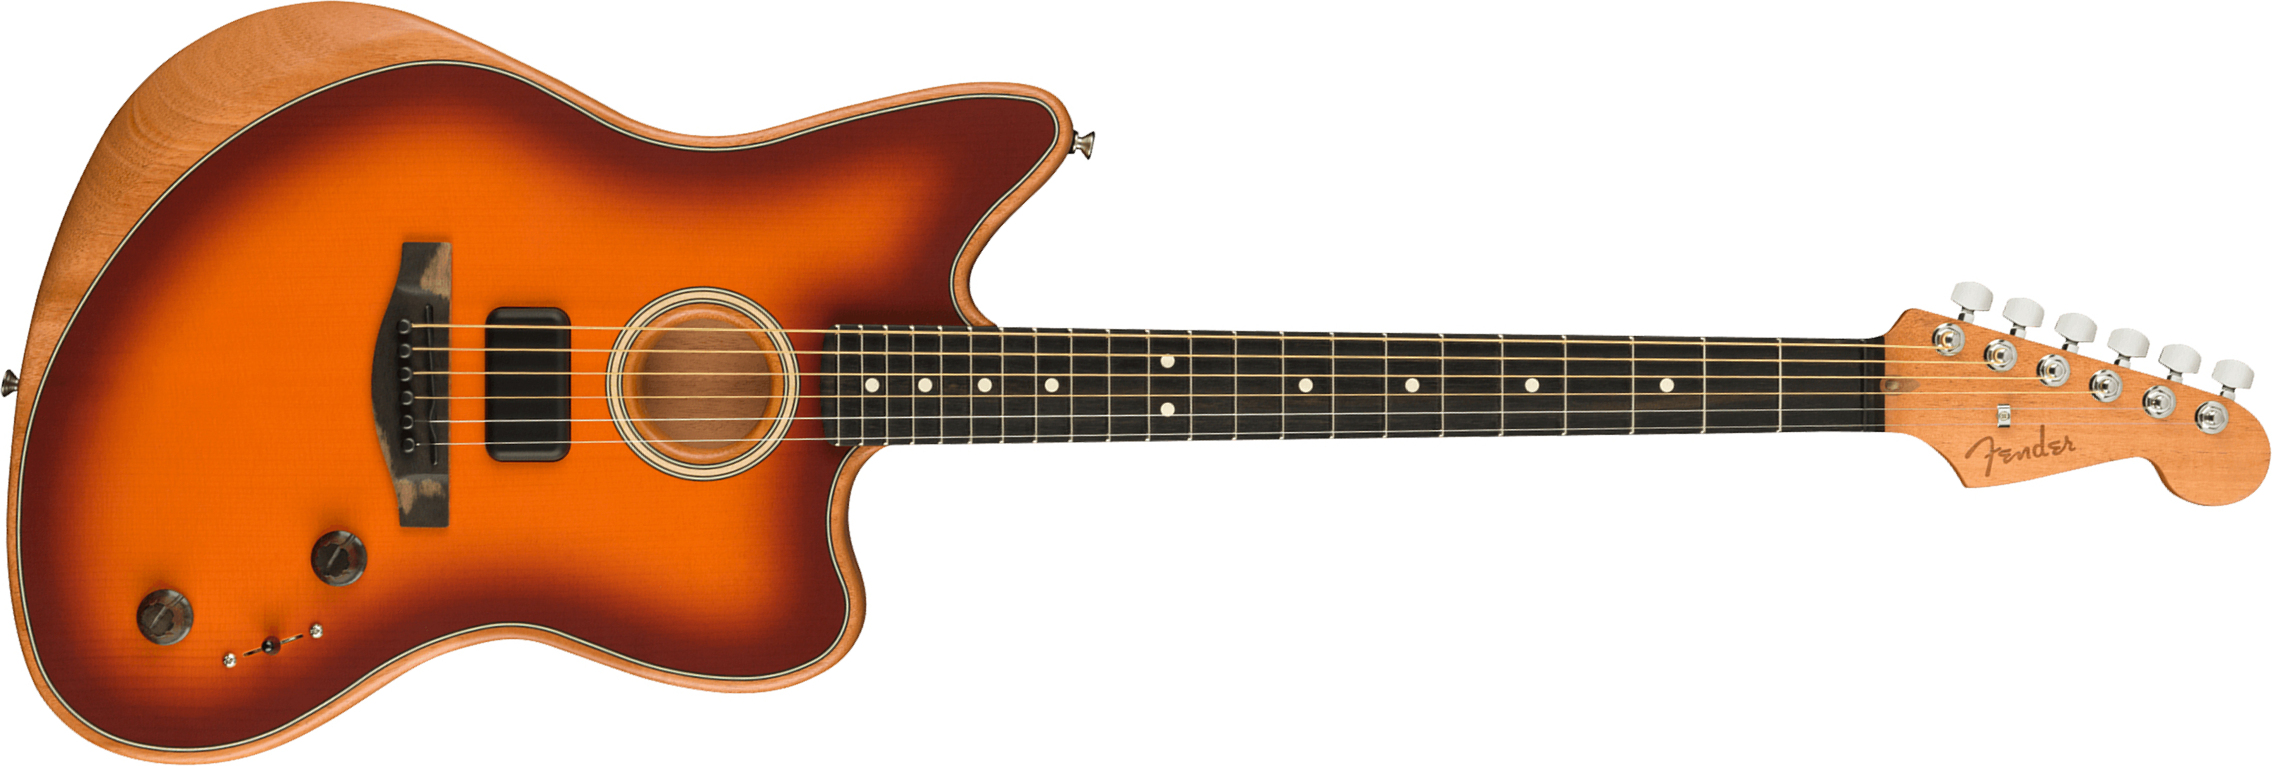 Fender American Acoustasonic Jazzmaster Usa Eb - Tobacco Sunburst - Elektroakustische Gitarre - Main picture